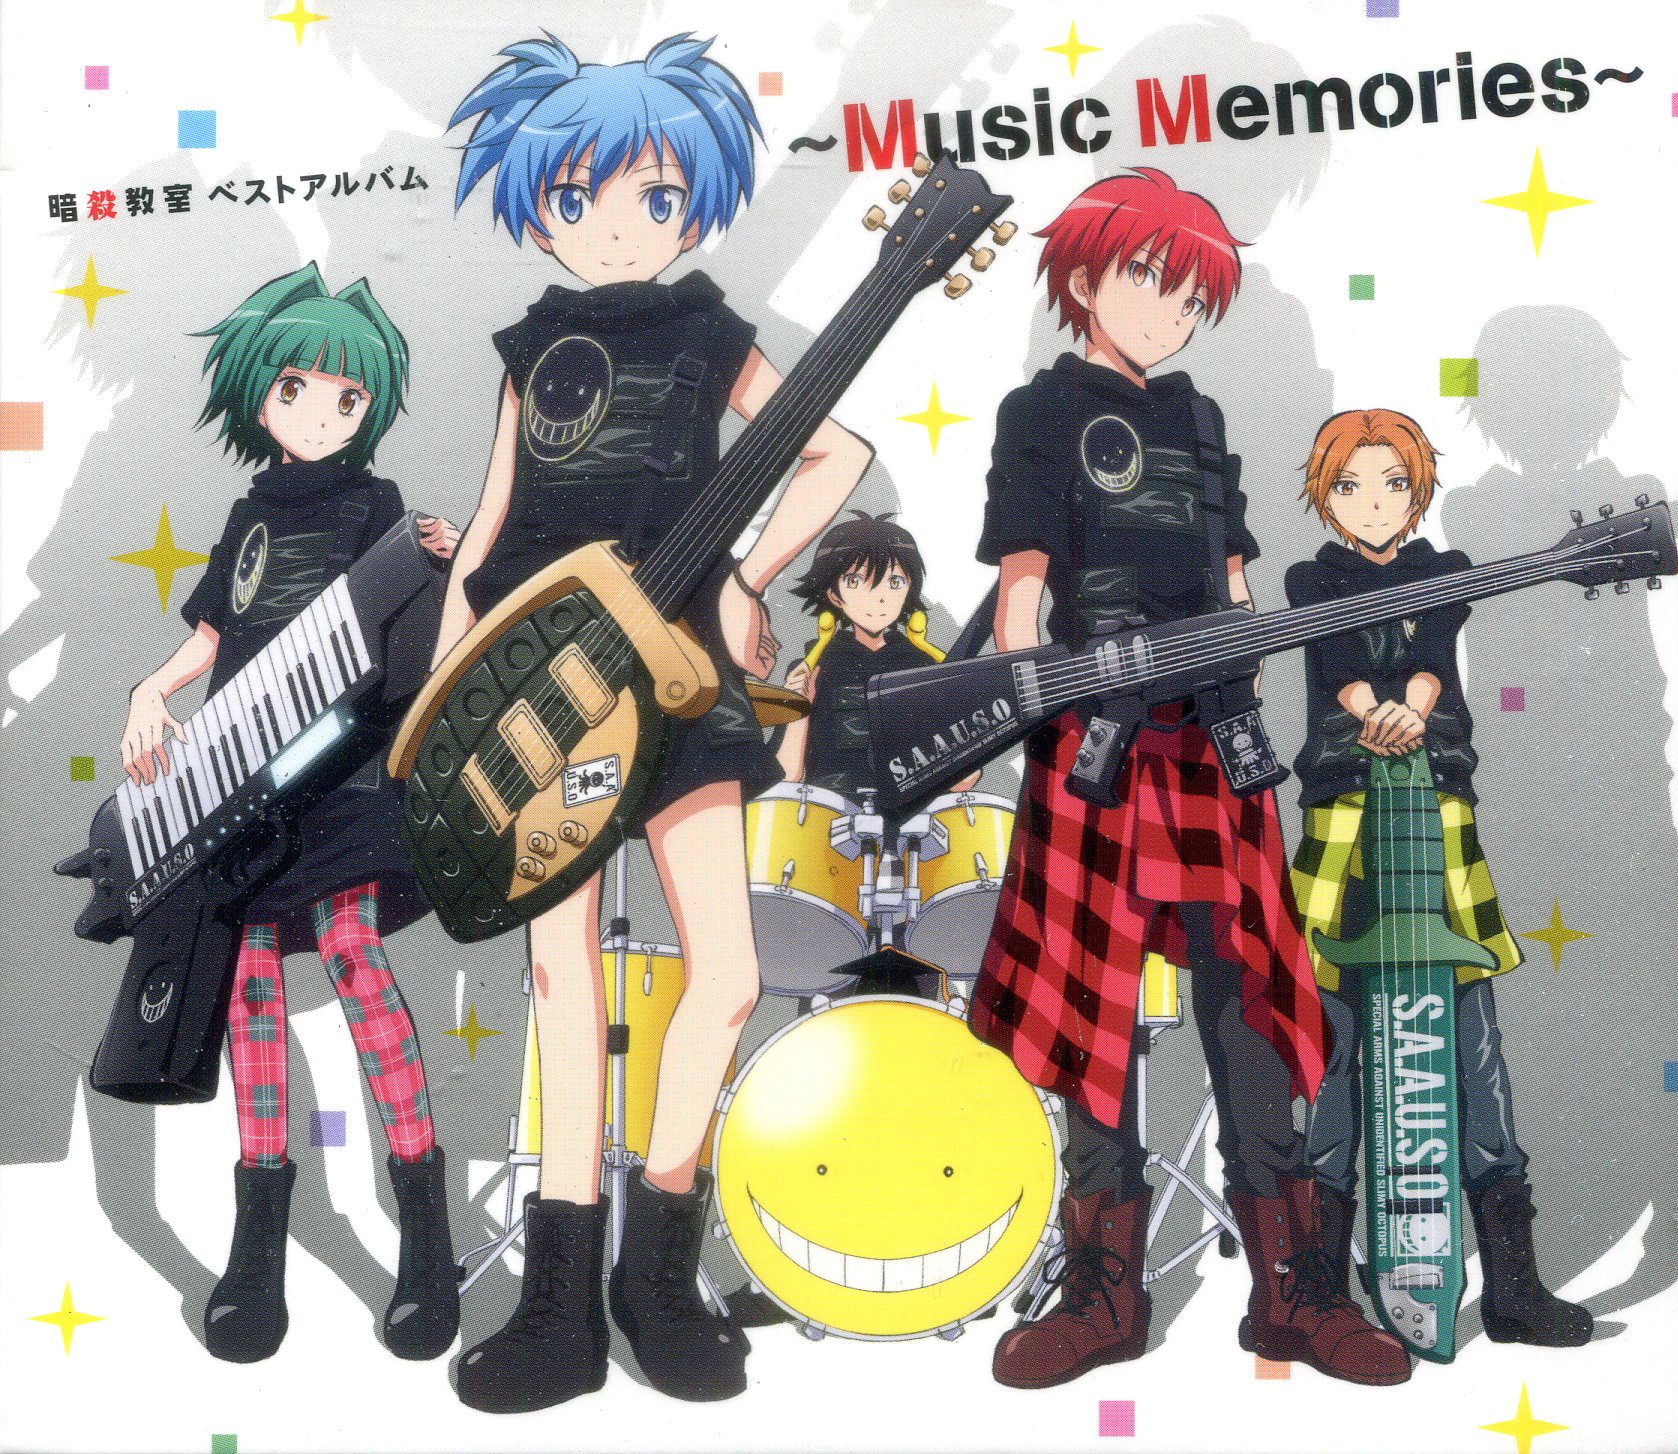 Anime Cd Assassination Classroom Best Album Memories Music First Edition Limited Mandarake 在线商店